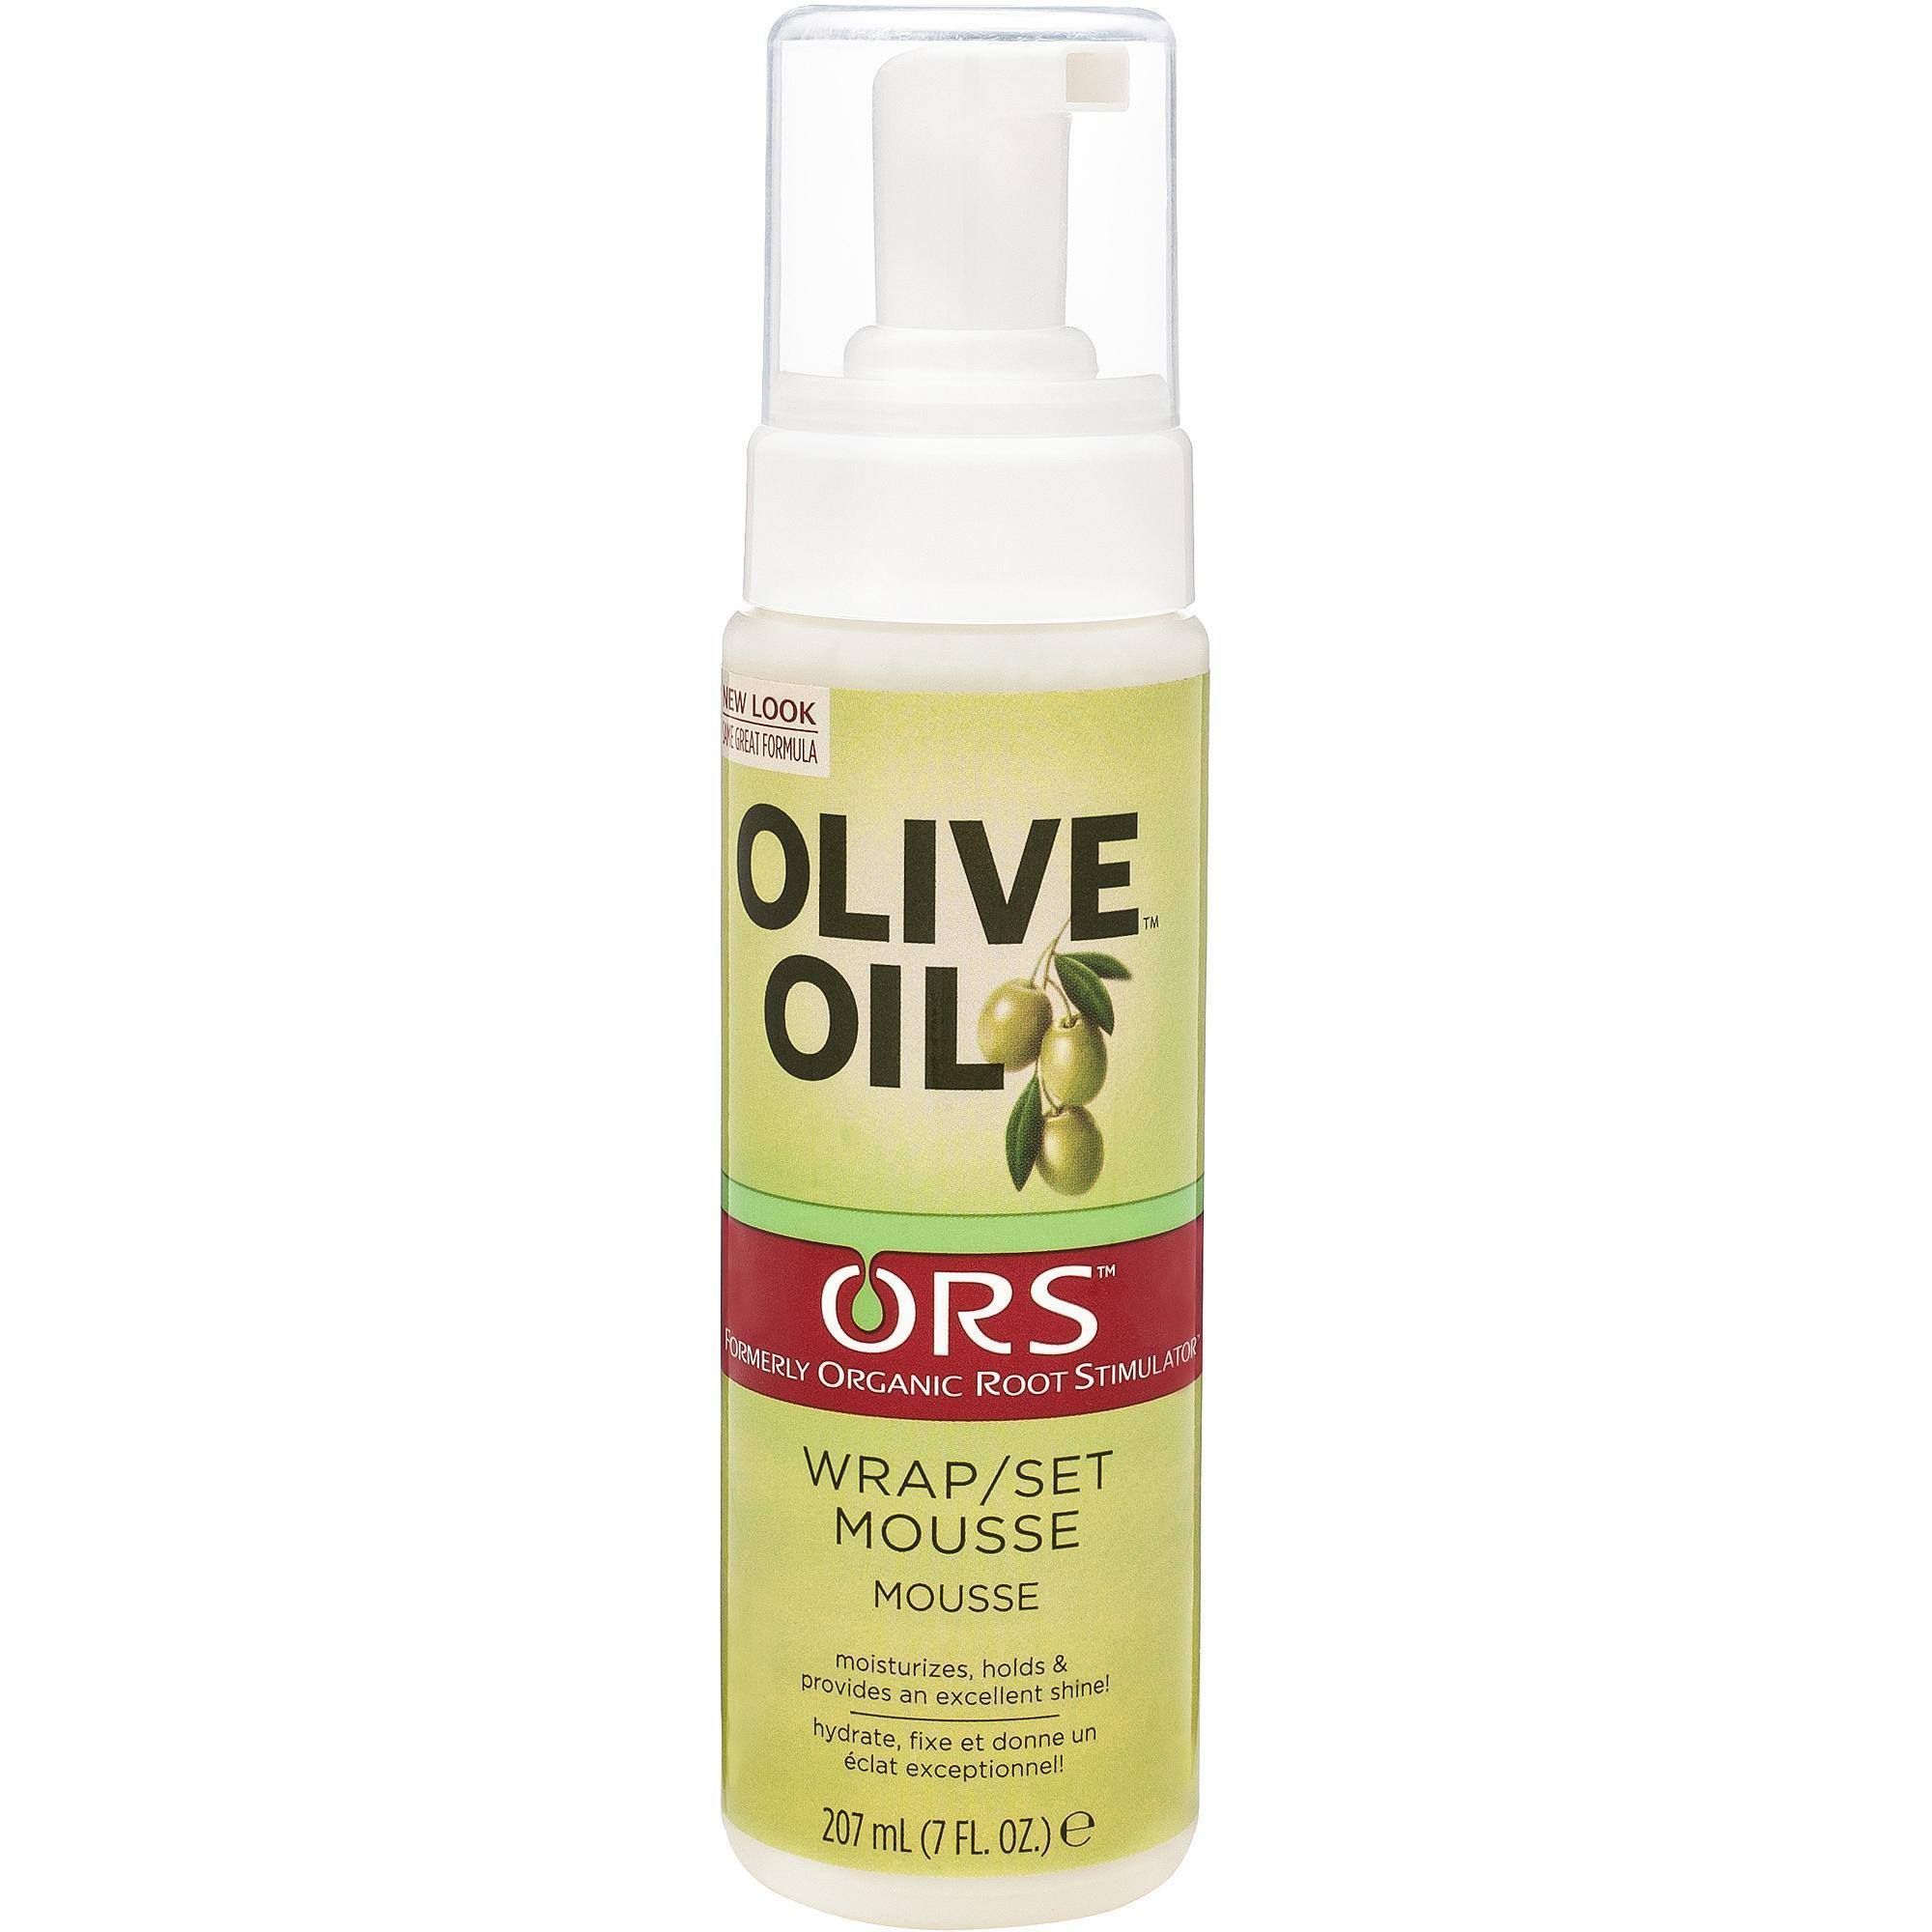 ORS Organic Root Stimulator Olive Oil Wrap/Set Mousse